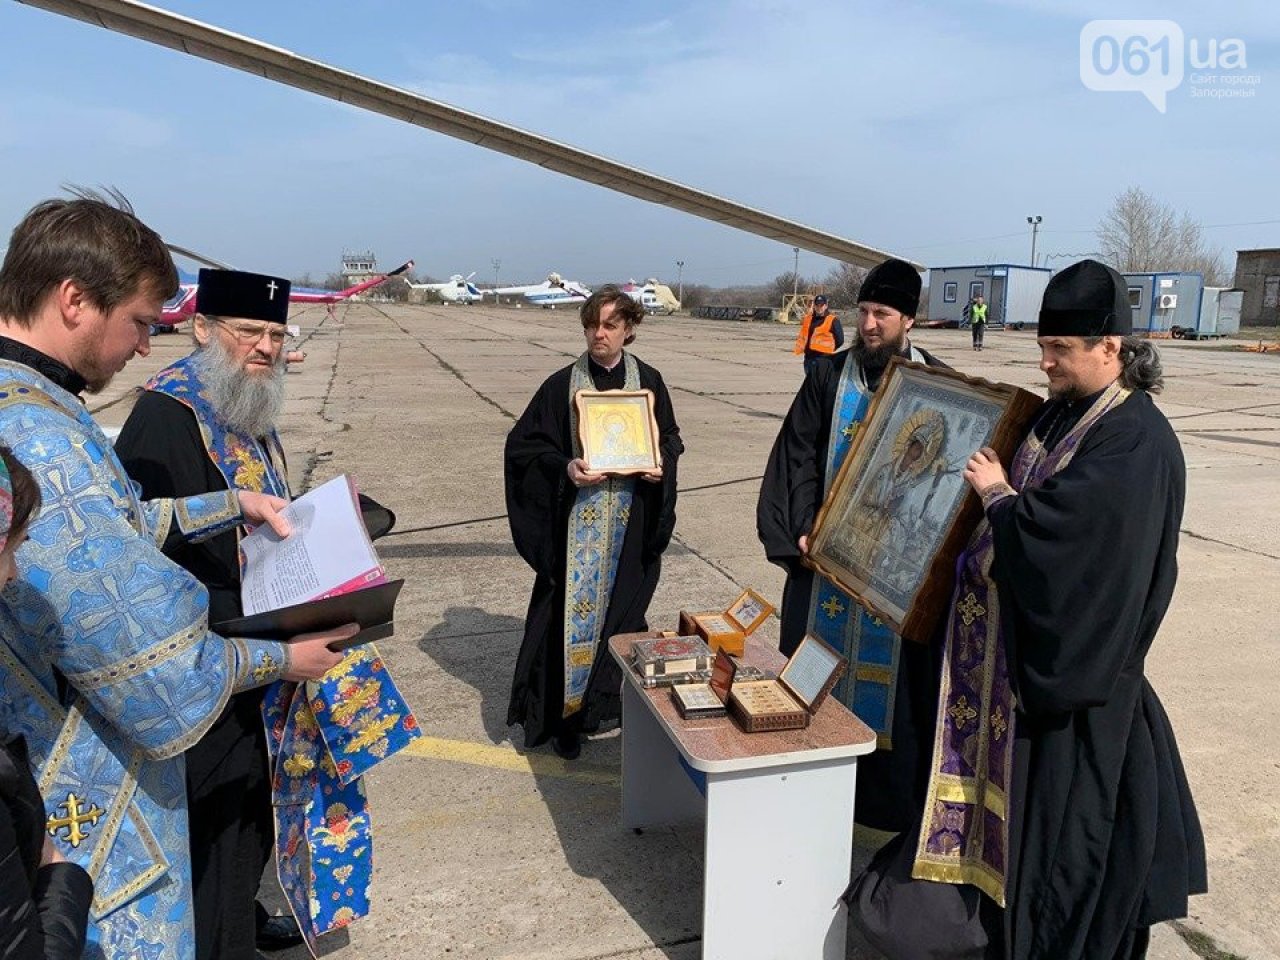 Священники УПЦ МП пролетели на вертолете над Запорожьем и прочитали молитву против коронавируса (ВИДЕО)